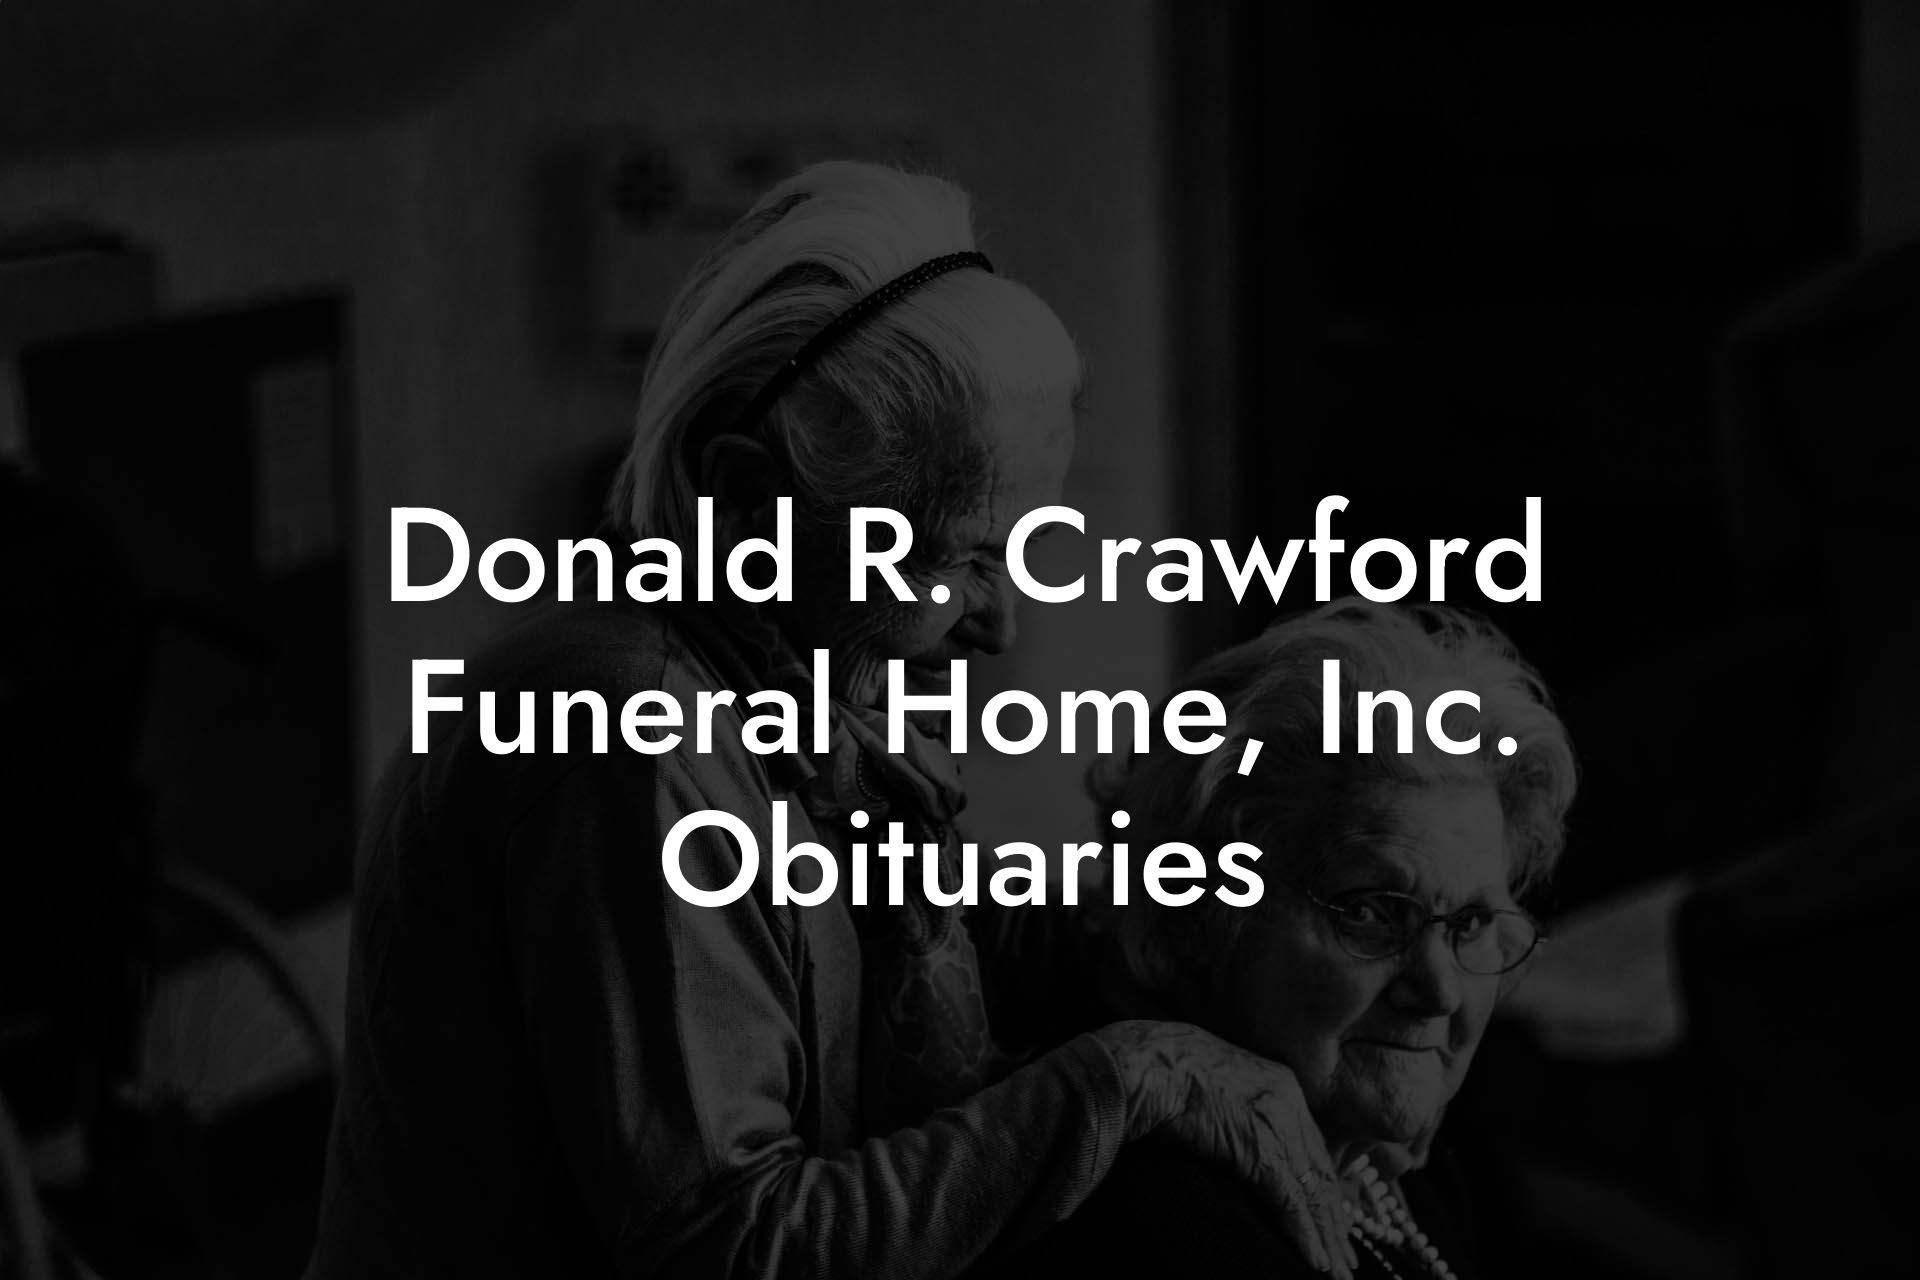 Donald R. Crawford Funeral Home, Inc. Obituaries